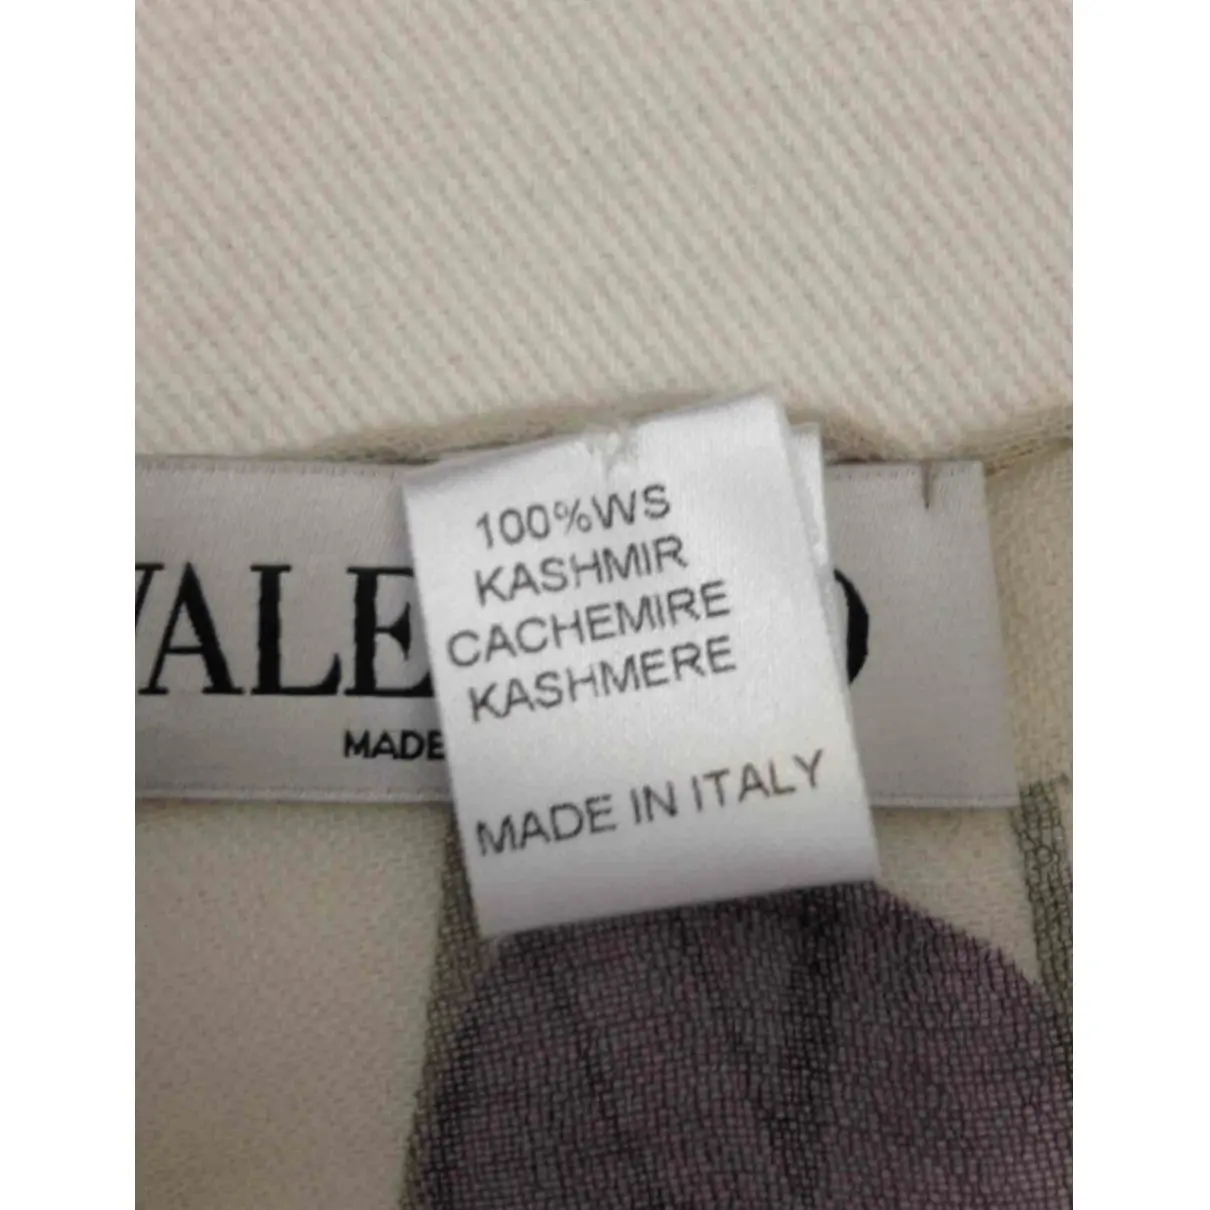 Cashmere scarf Valentino Garavani